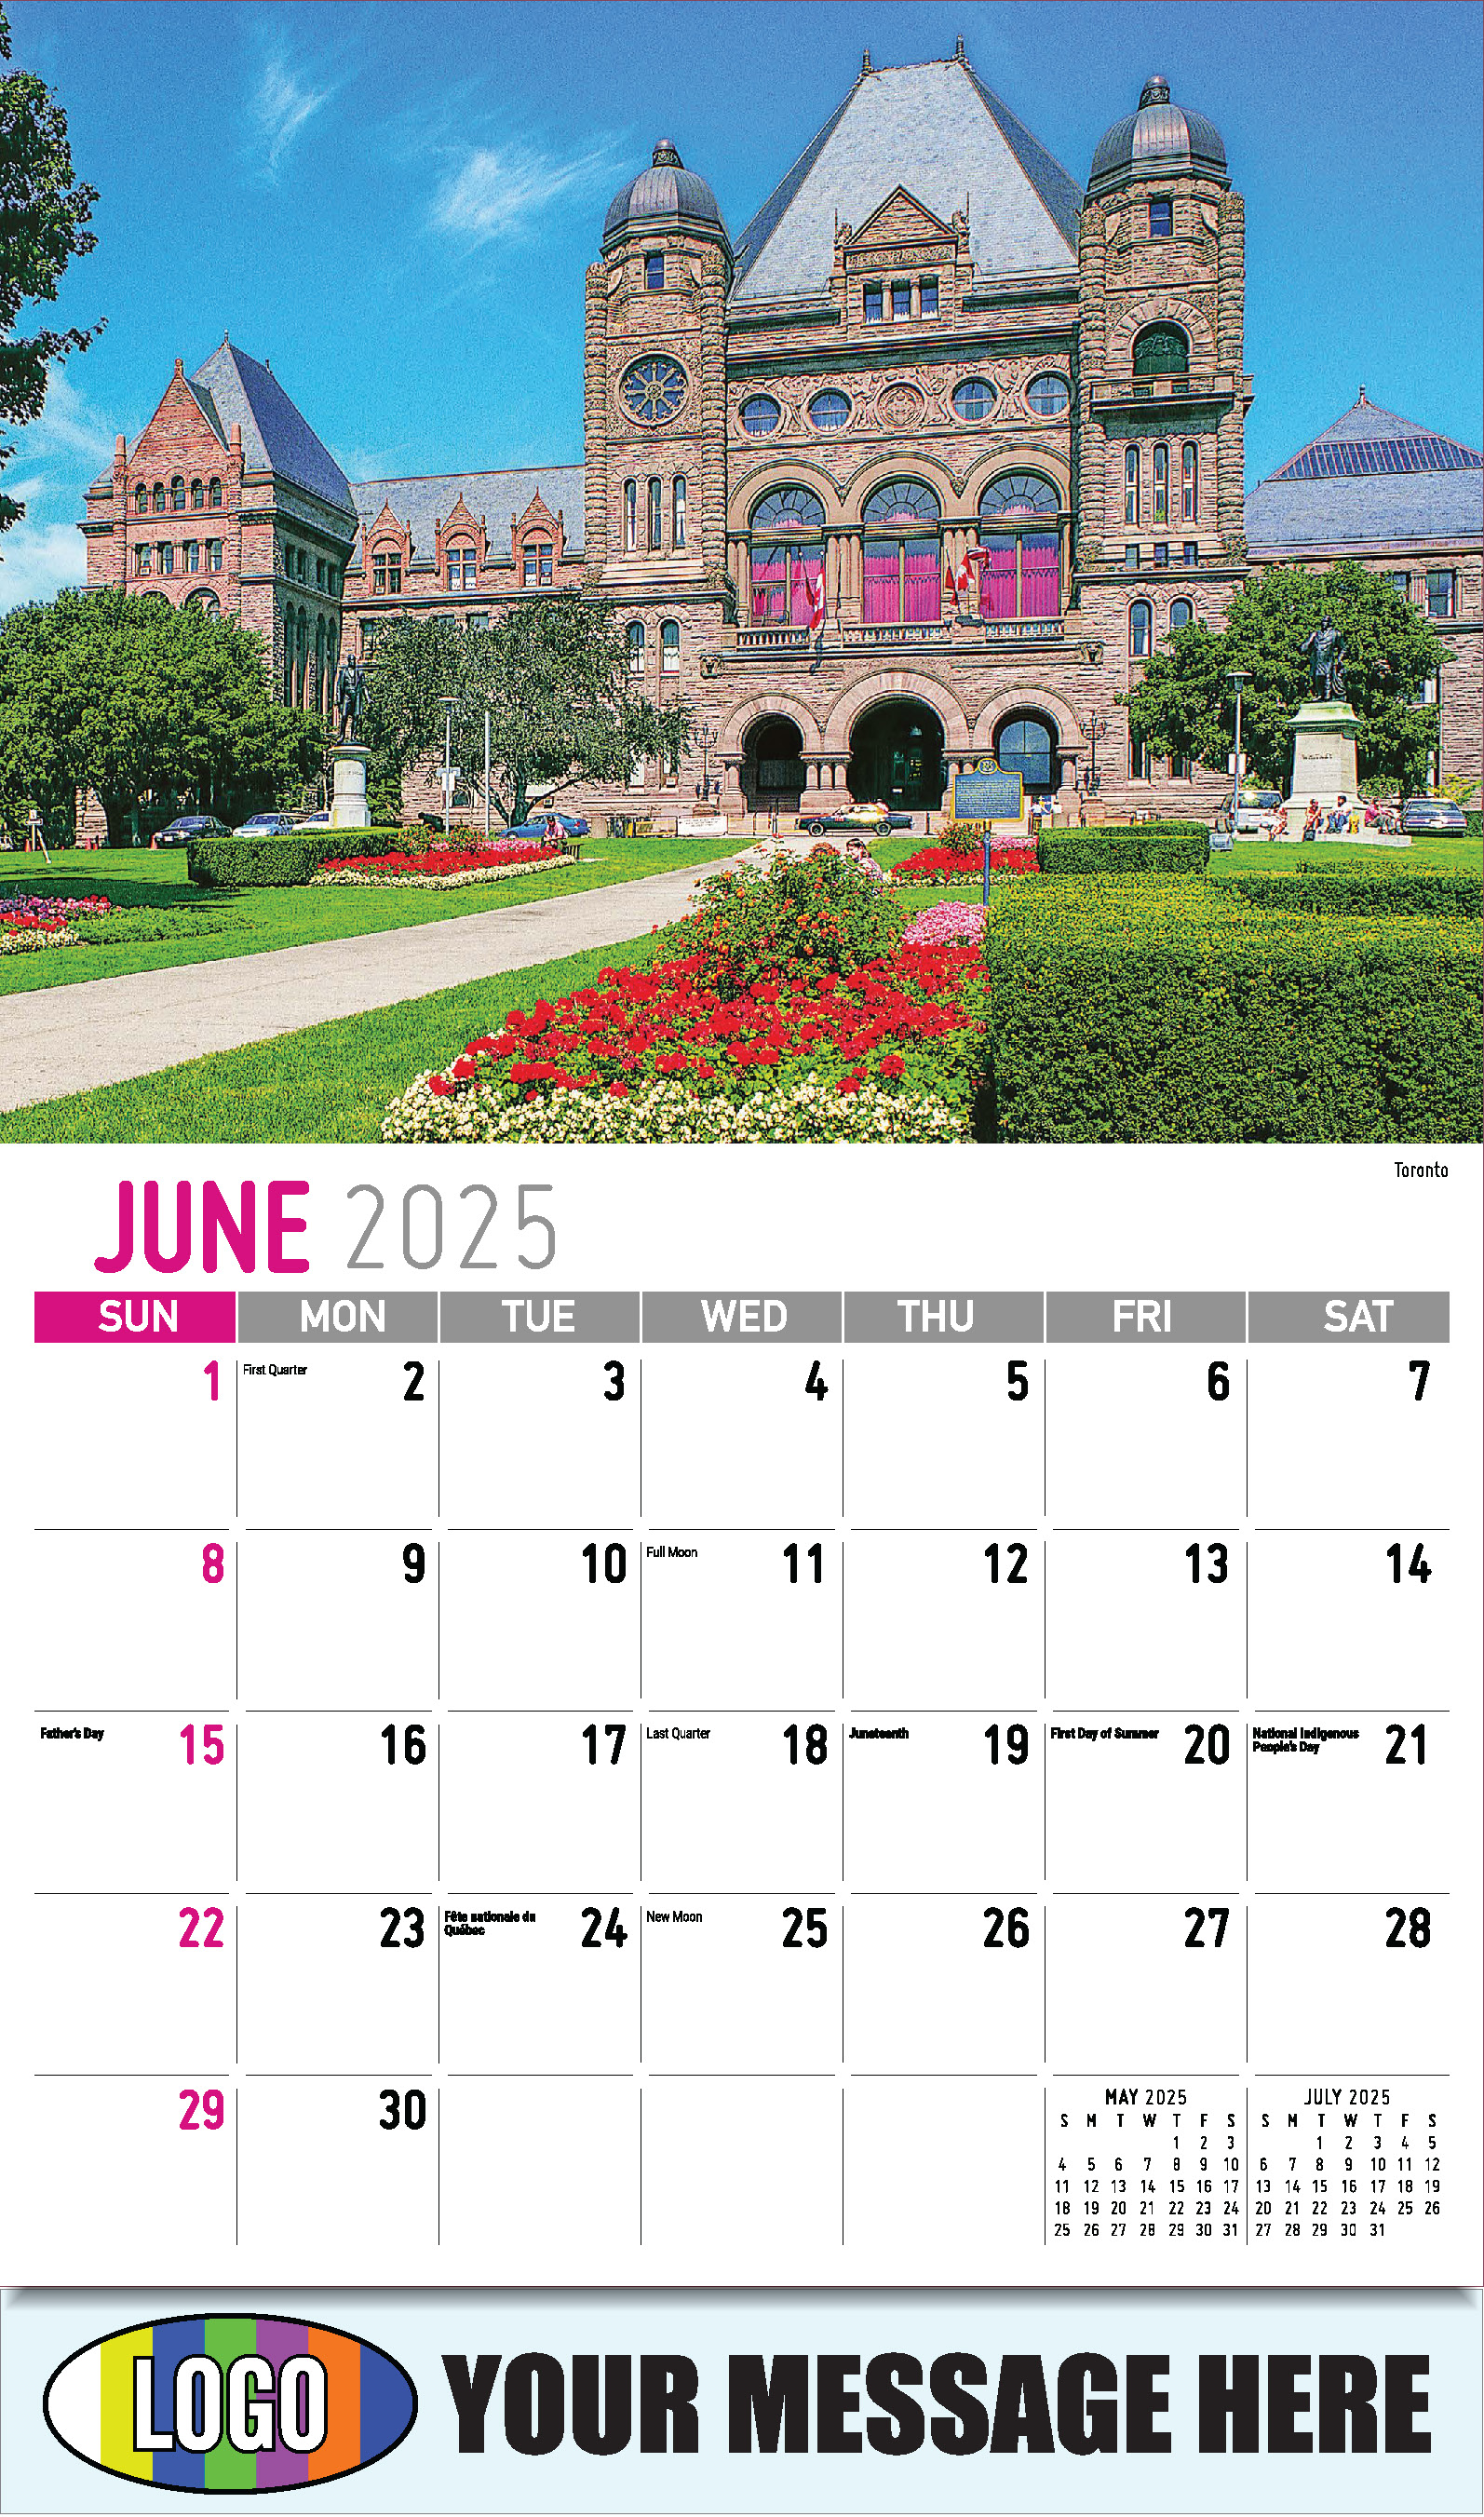 Scenes of Ontario 2025 Business Promo Wall Calendar - June